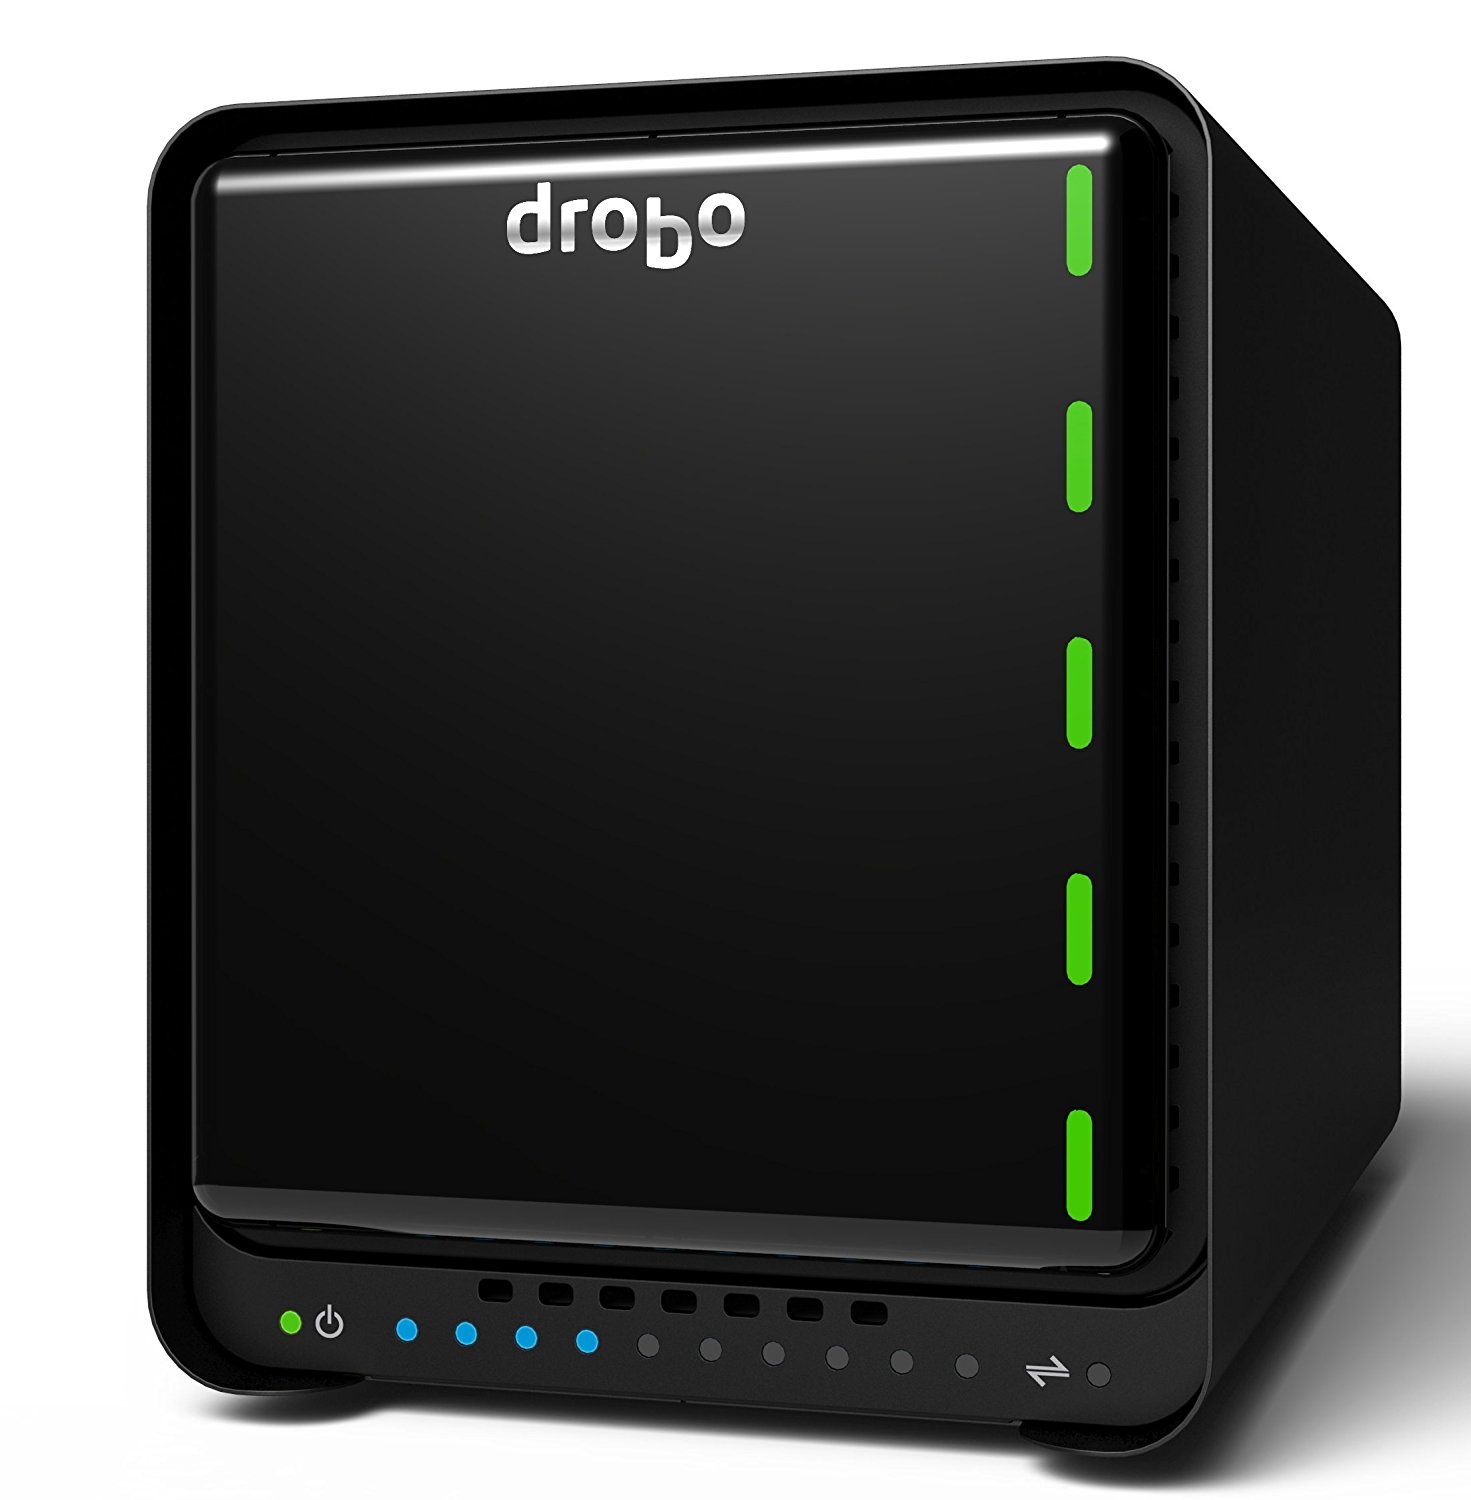 PC- Drobo direct Drobo 5D3 DAS-Array (Direct Attached Storage) mit 5 Laufwerken - Dual Thunderbolt 3 und USB 3.0 Typ C-Anschlüsse (DRDR6A21)